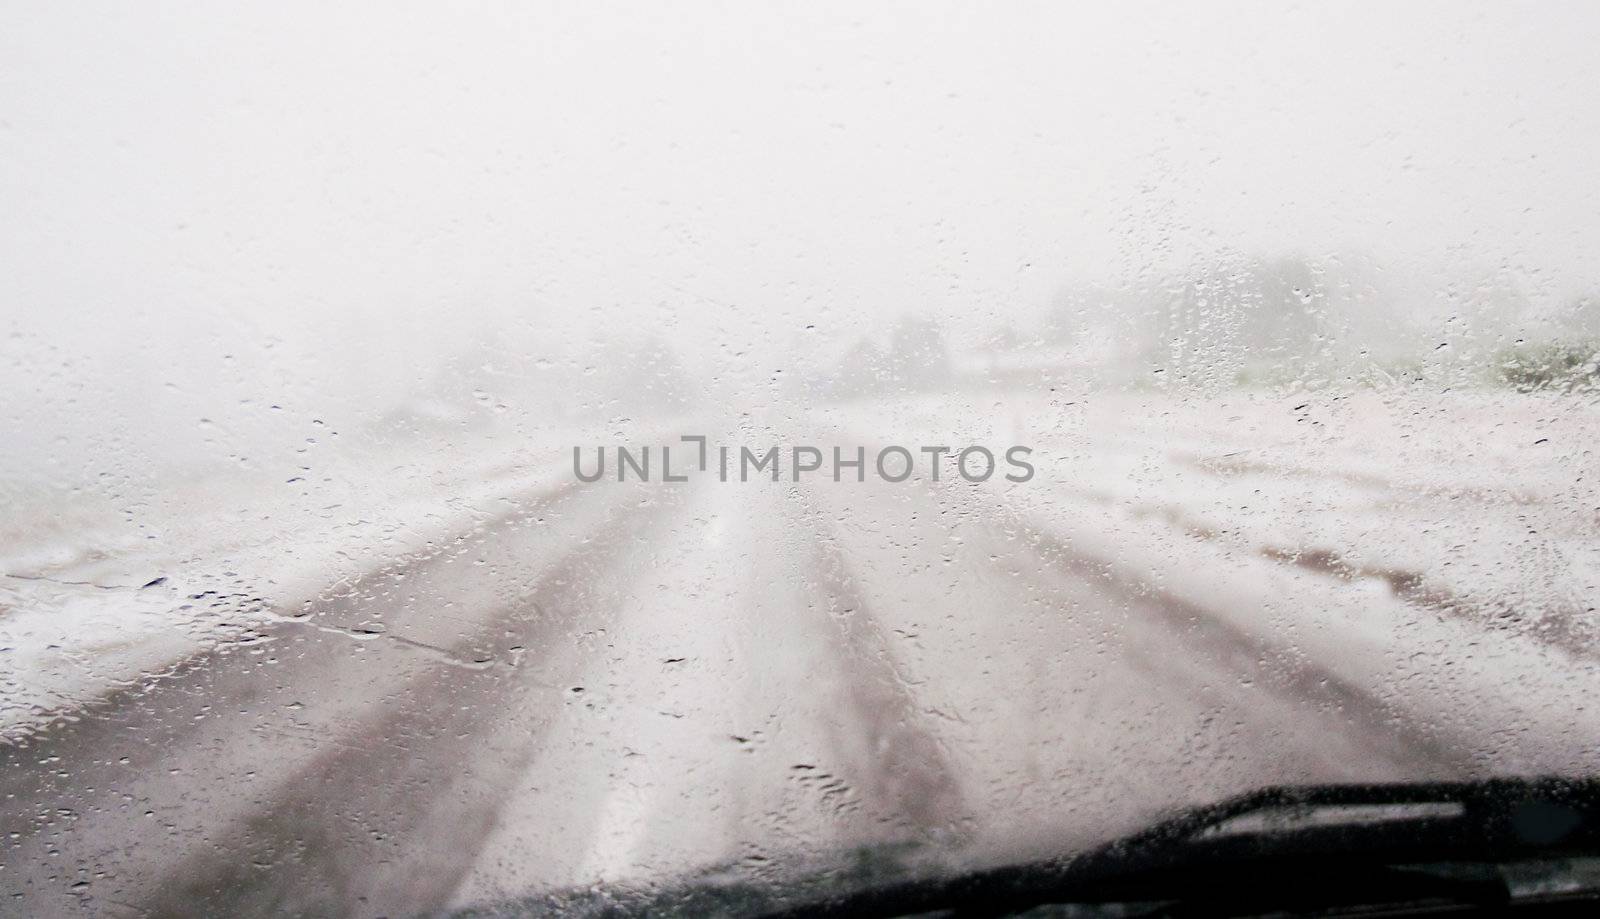 view through wet car window in a winter landscape